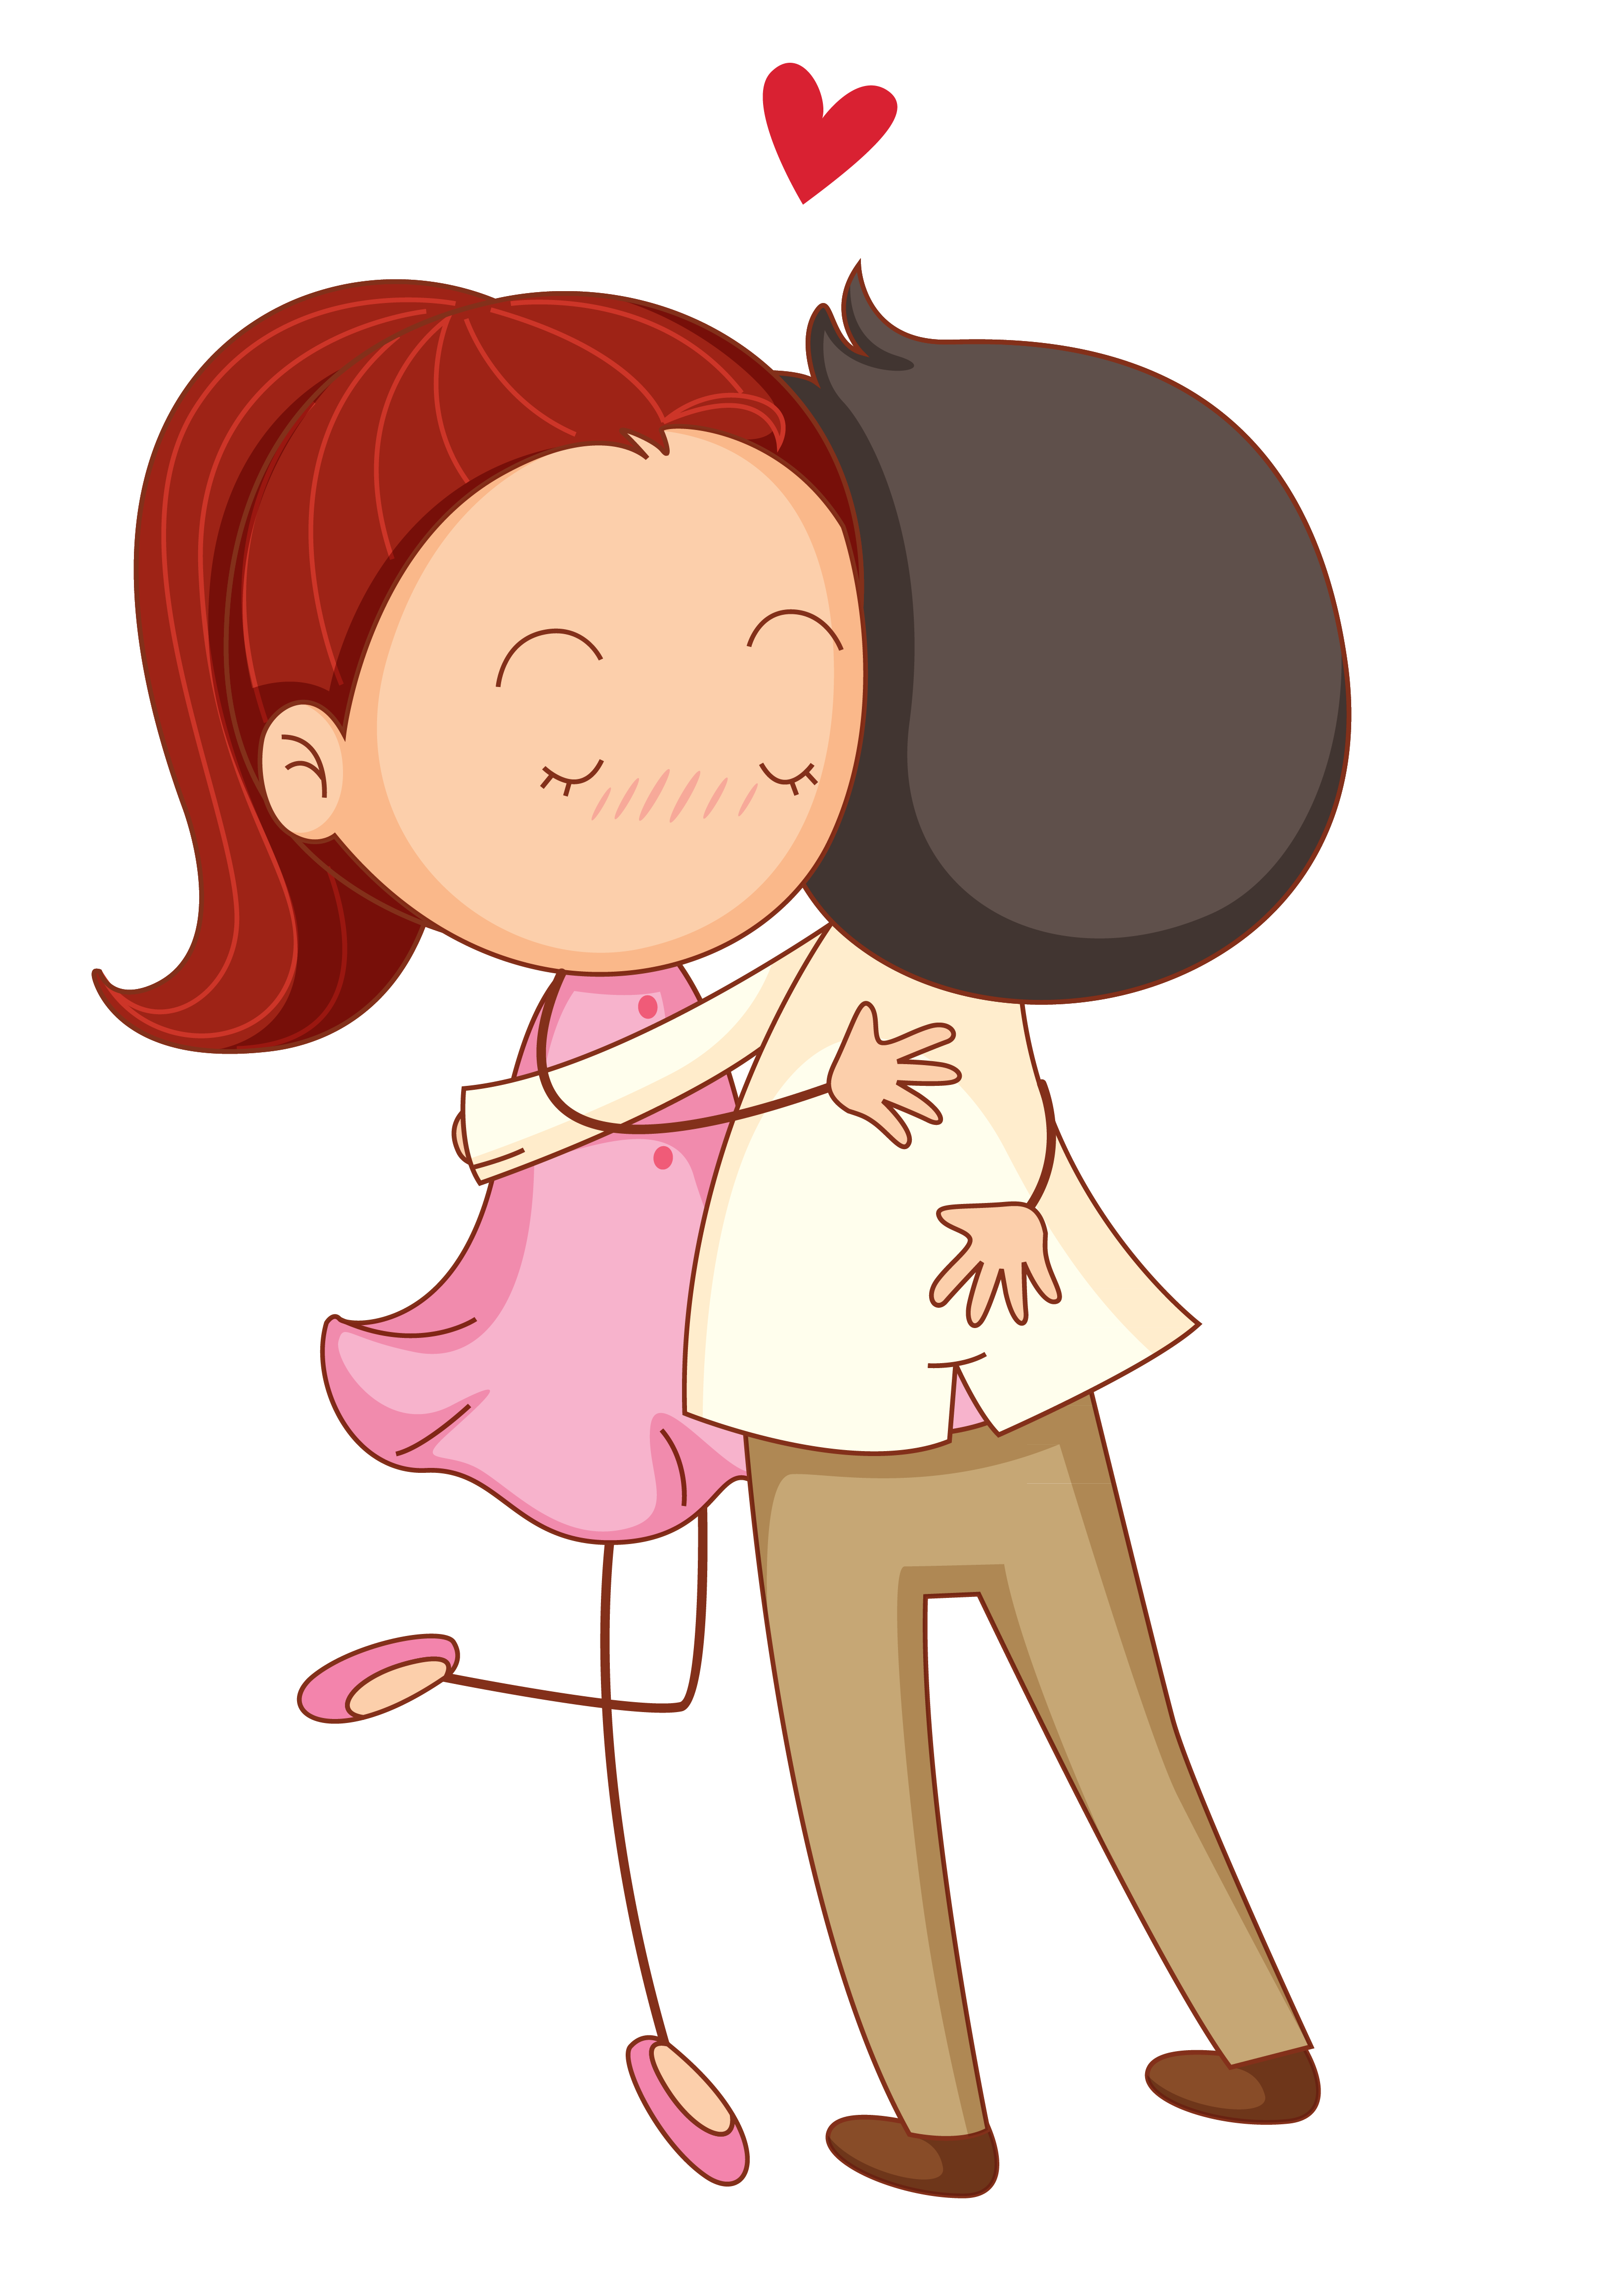 Romance Couple Hug Love Cartoon PNG Image High Quality Clipart